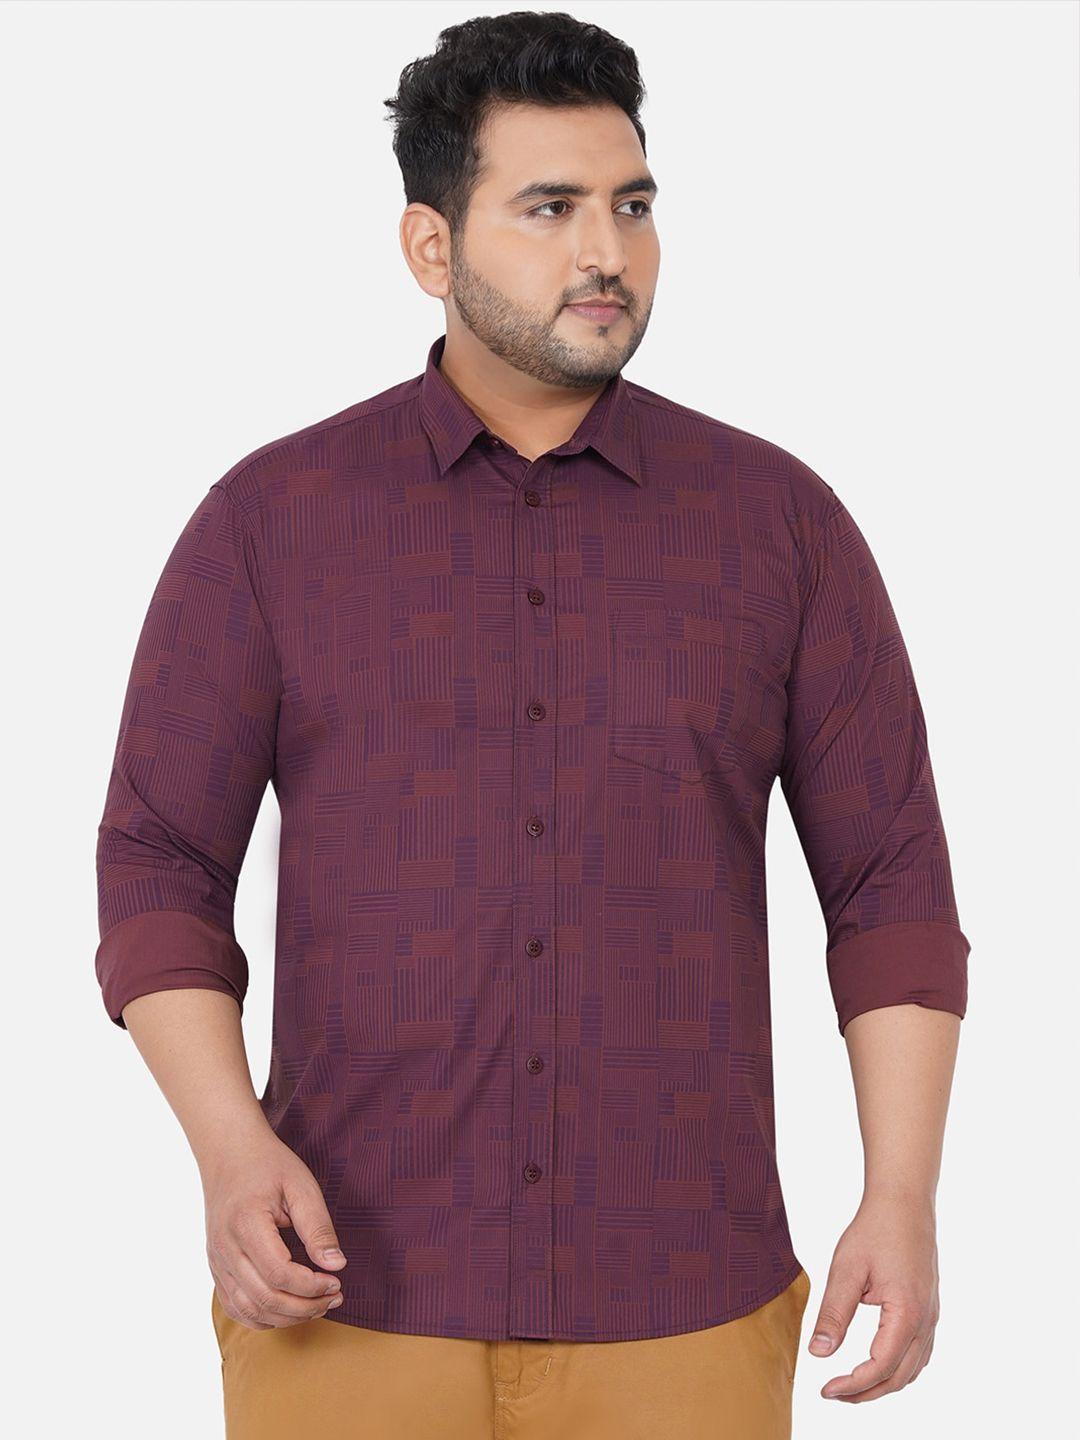 john pride men maroon & purple geometric printed cotton plus size casual shirt